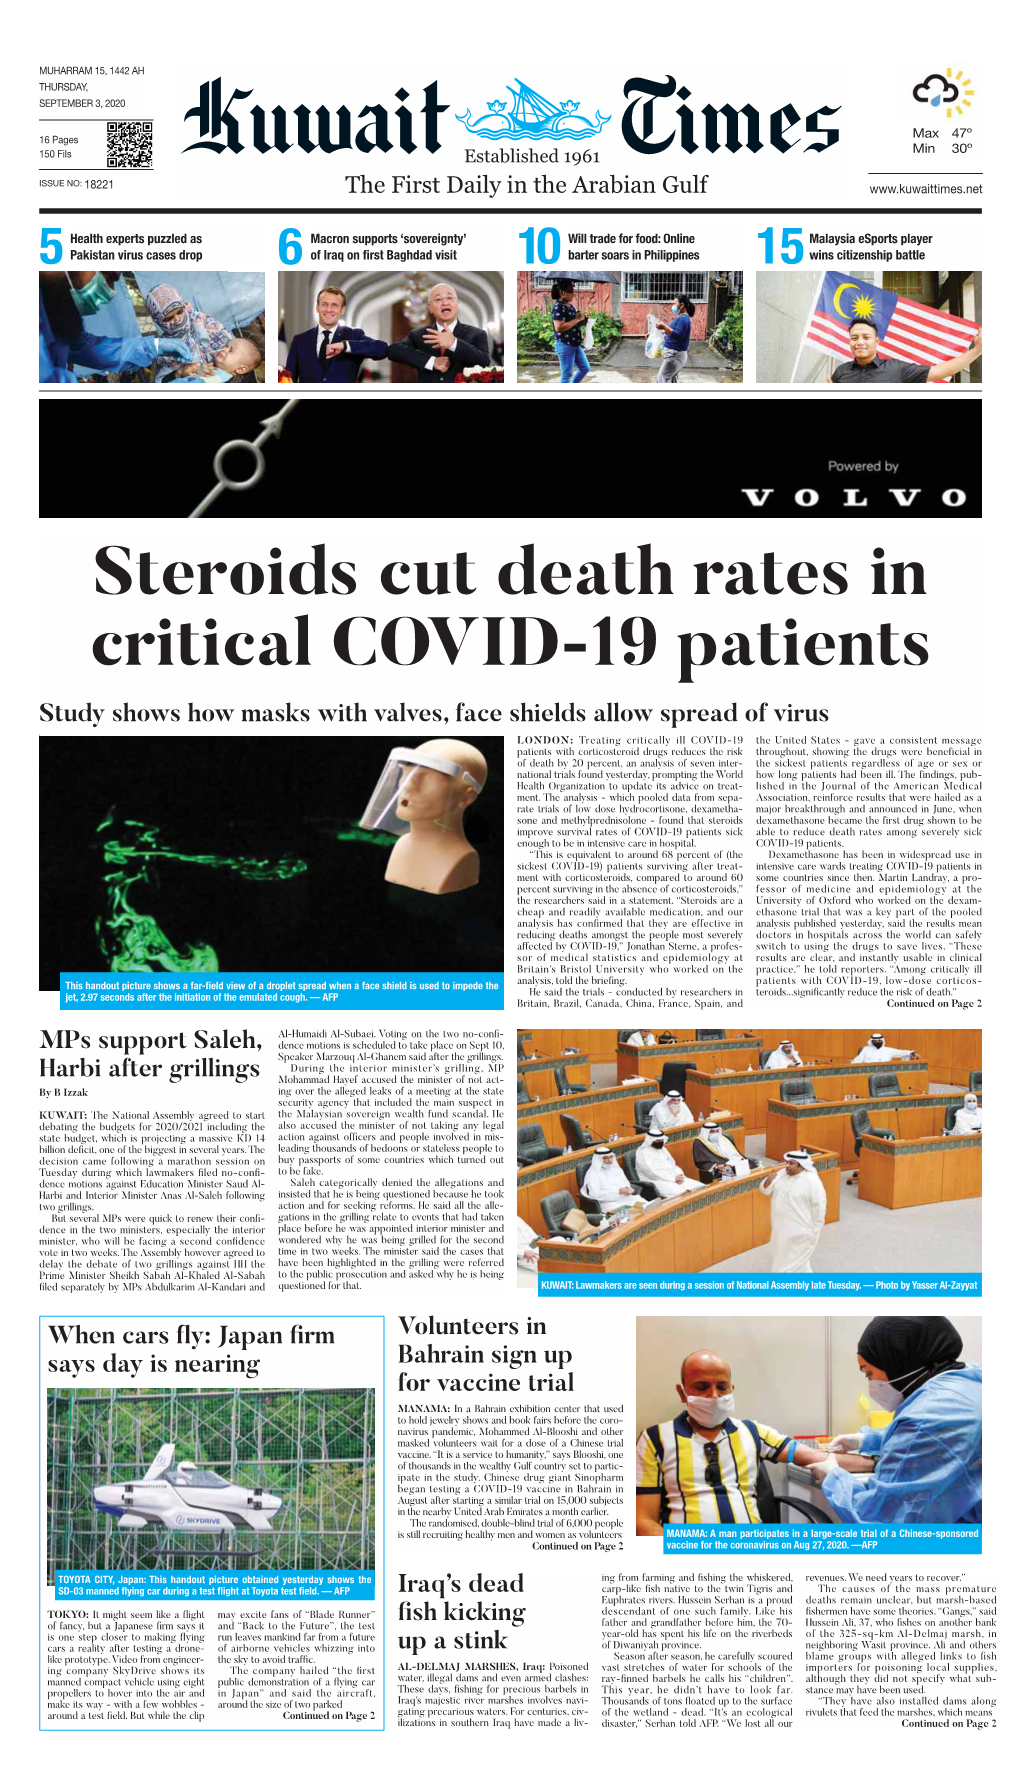 Steroids Cut Death Rates in Critical COVID-19 Patients